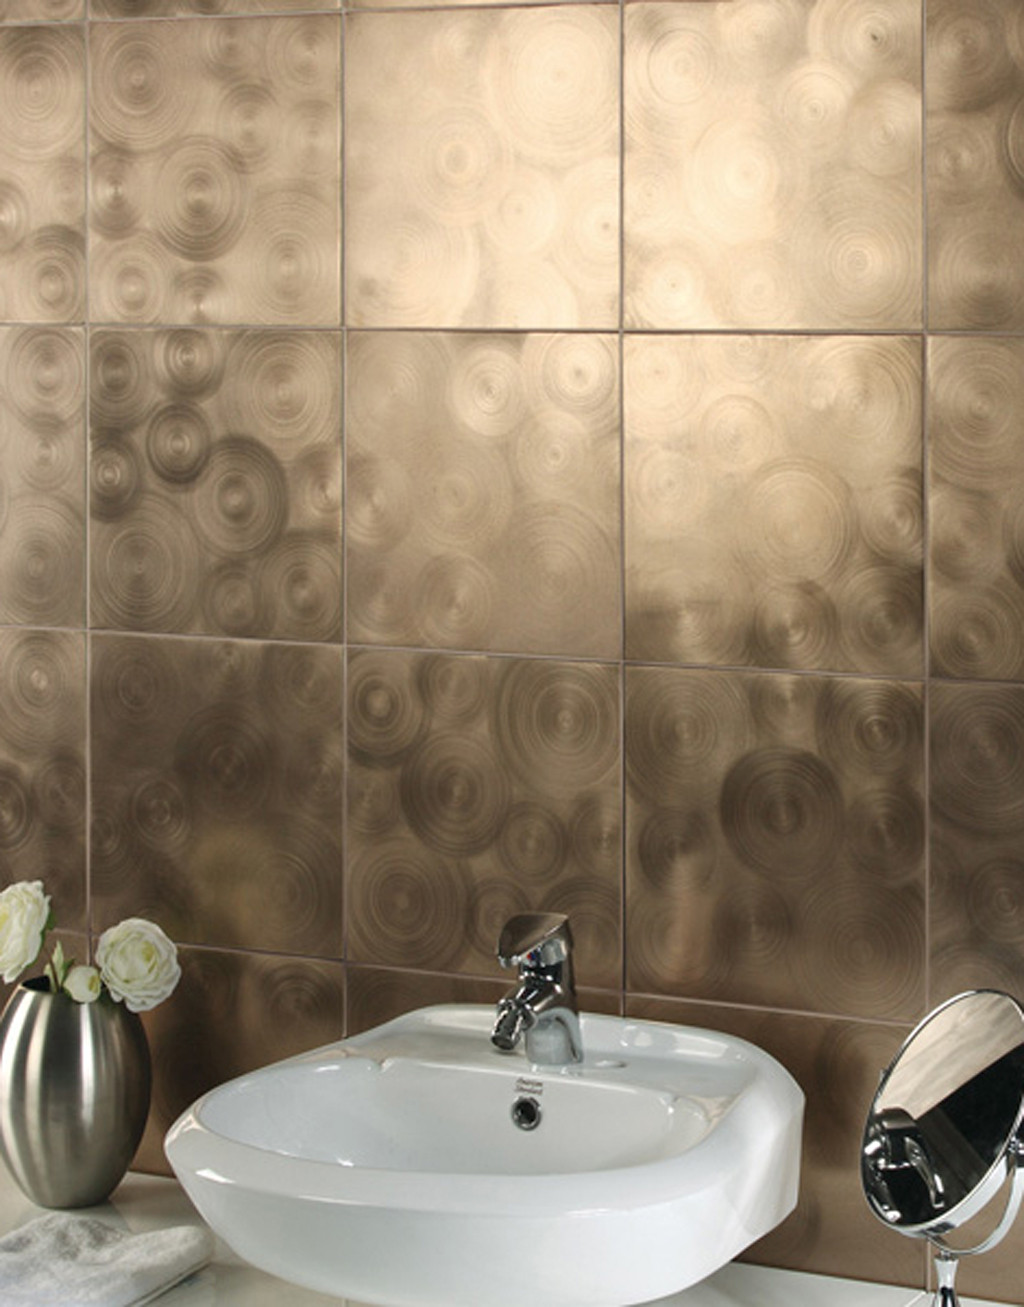 Tile Bathroom Wall Ideas
 30 amazing pictures decorative bathroom tile designs ideas